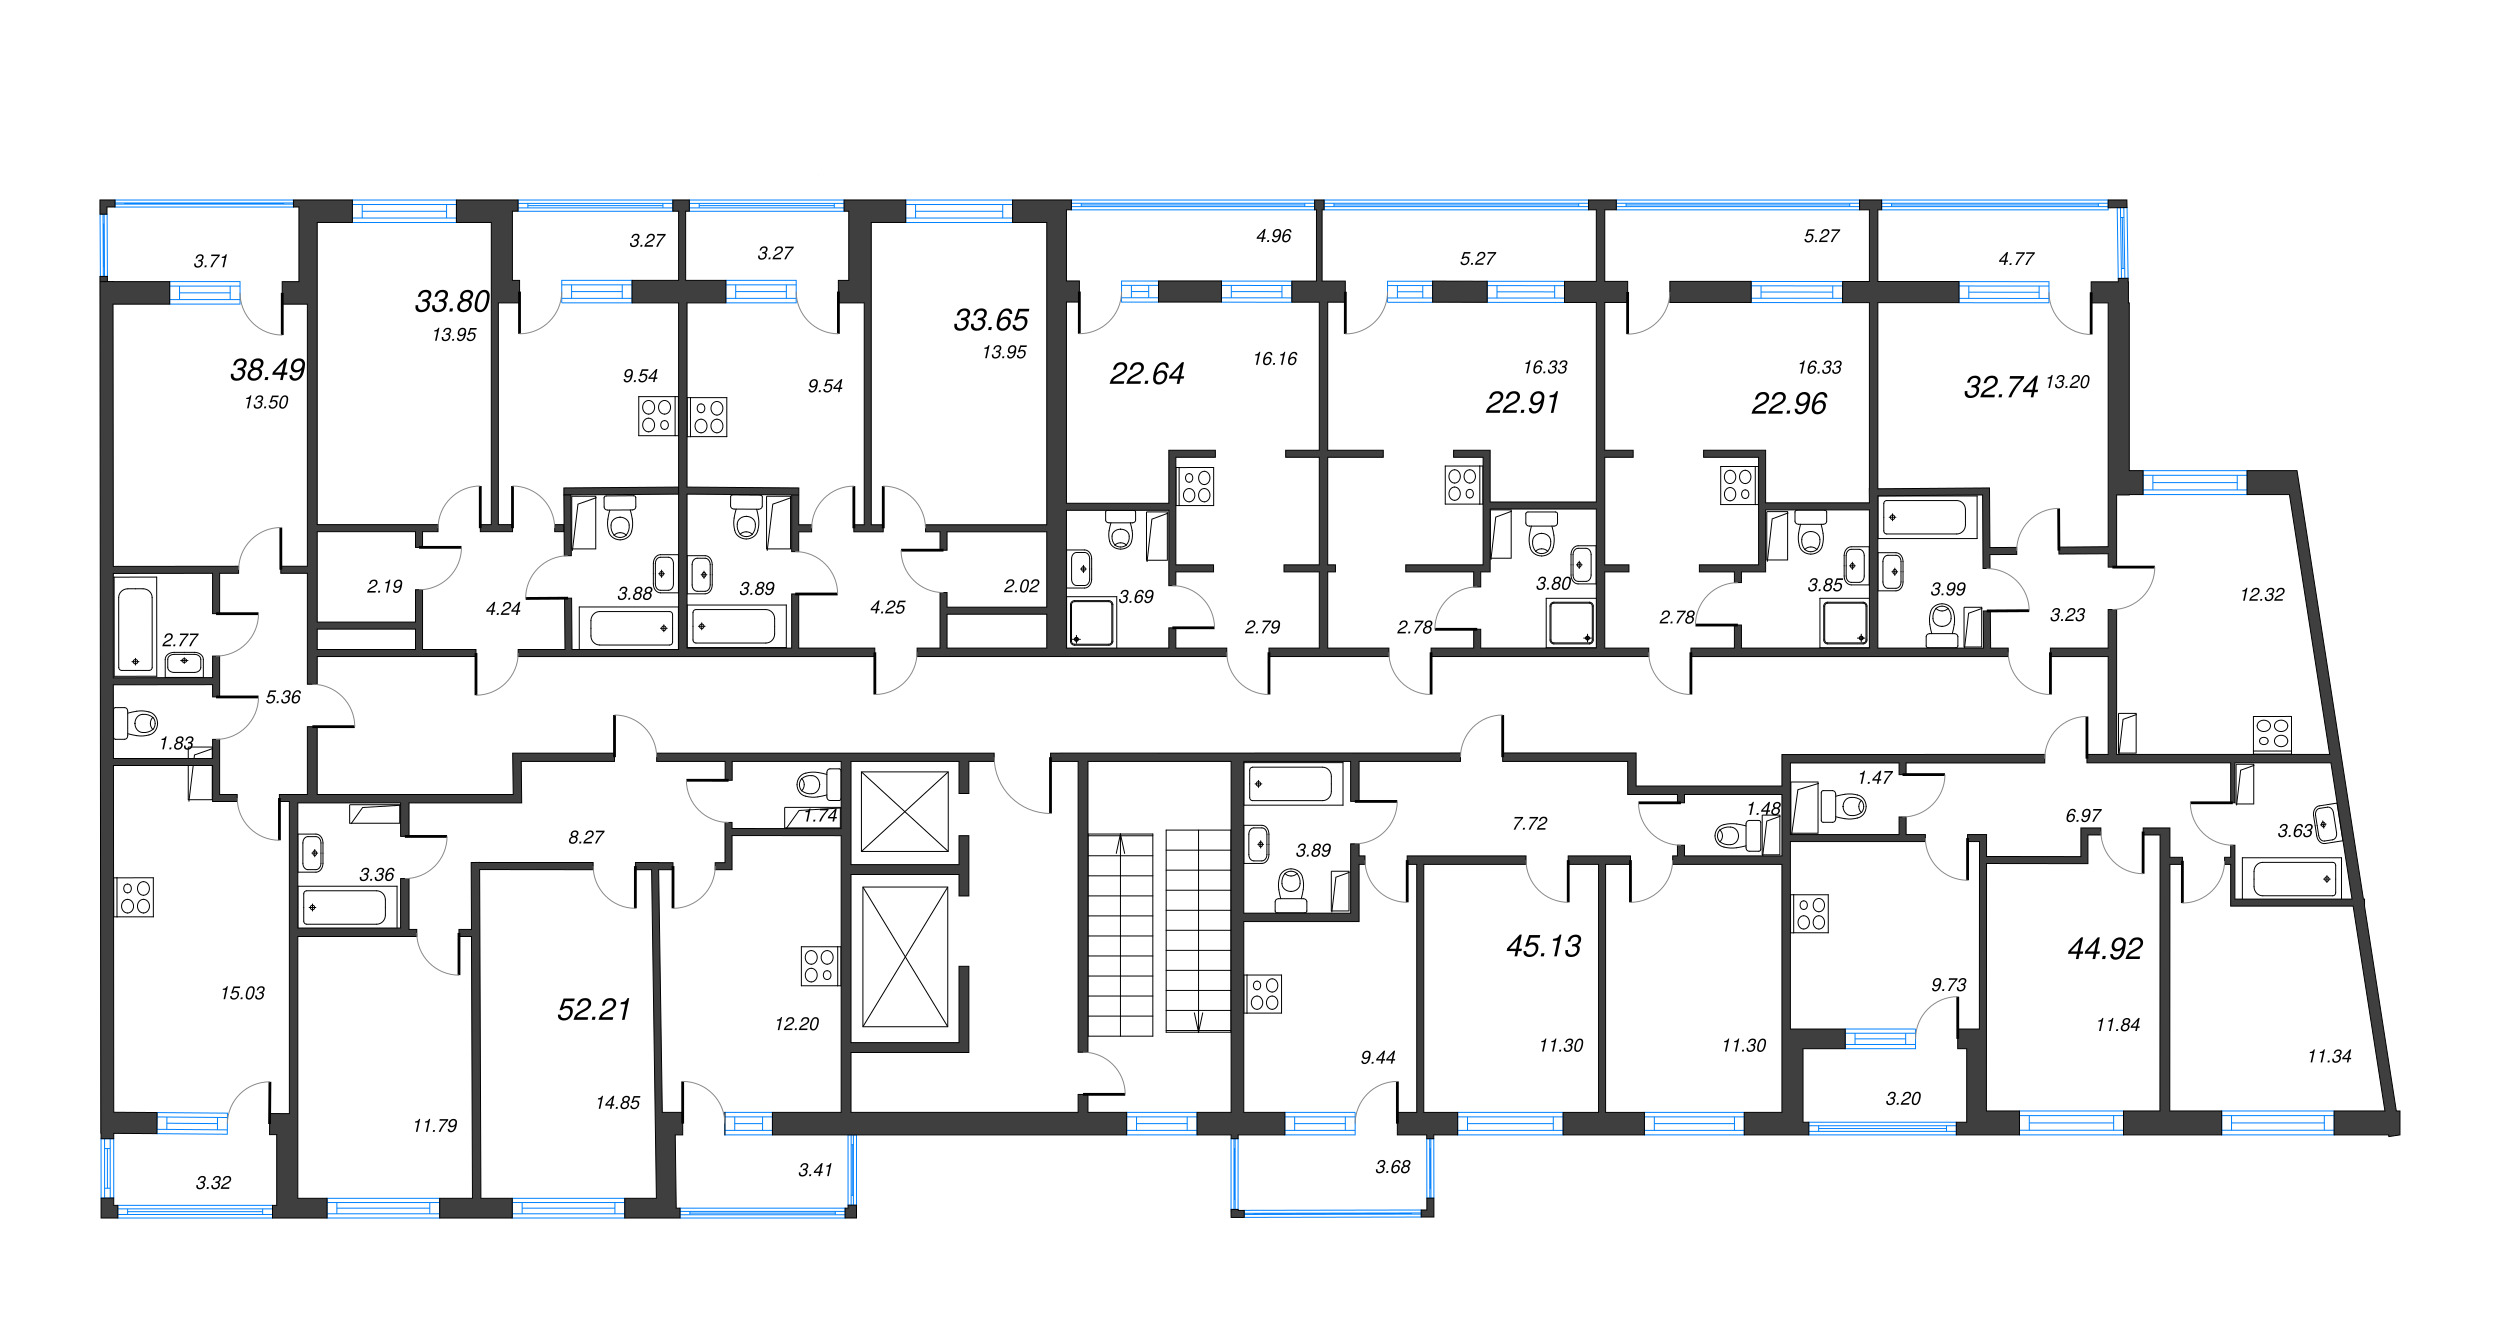 2-комнатная (Евро) квартира, 38.49 м² - планировка этажа